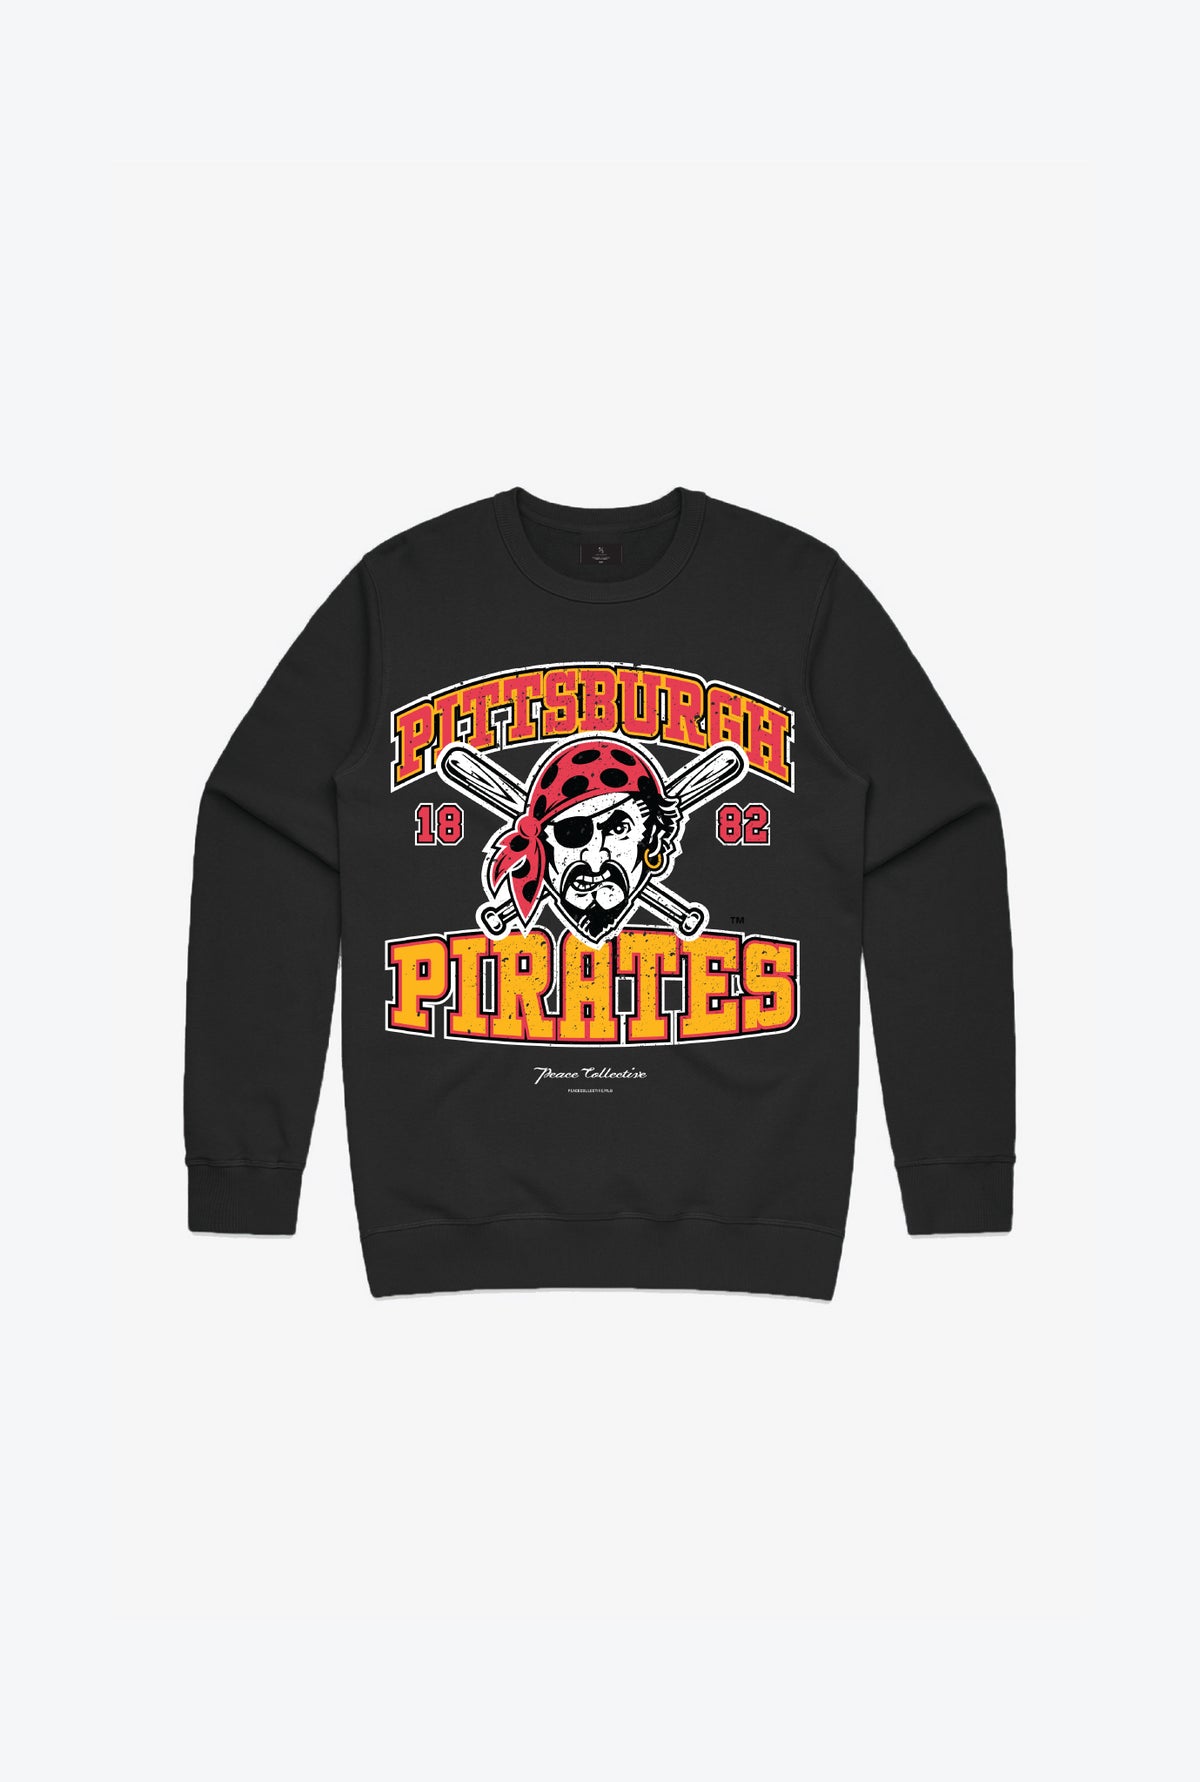 Pittsburgh Pirates Vintage Kids Crewneck - Black